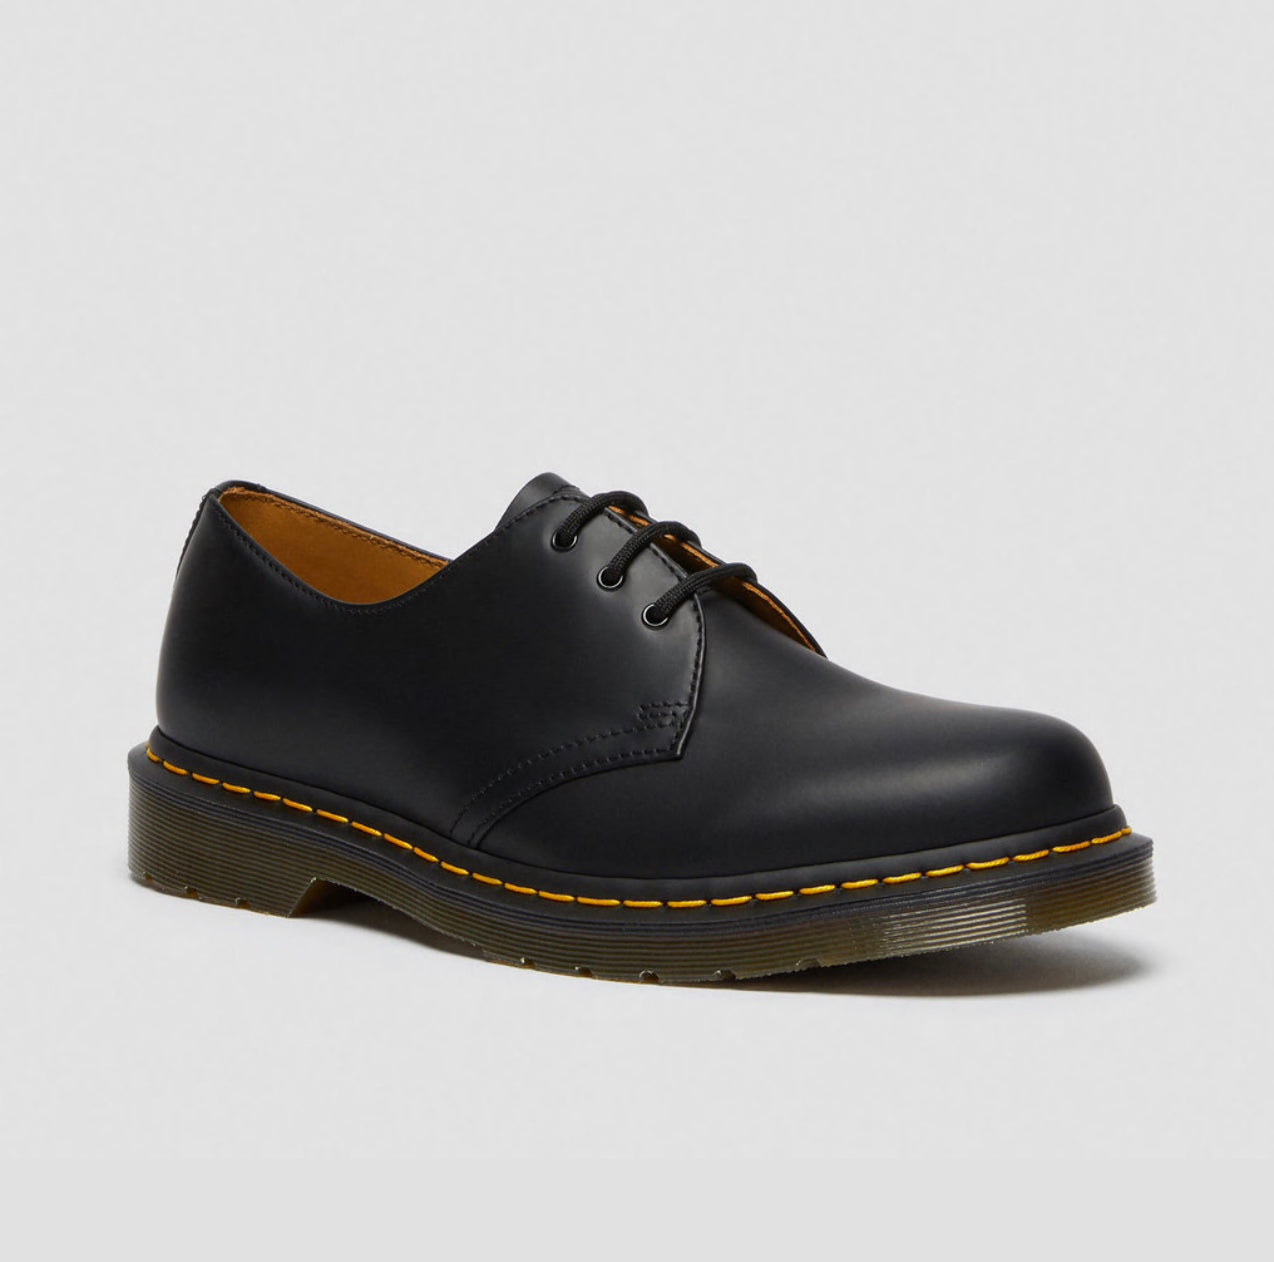 Dr Martens 1461 Oxford Leather Shoes - Black